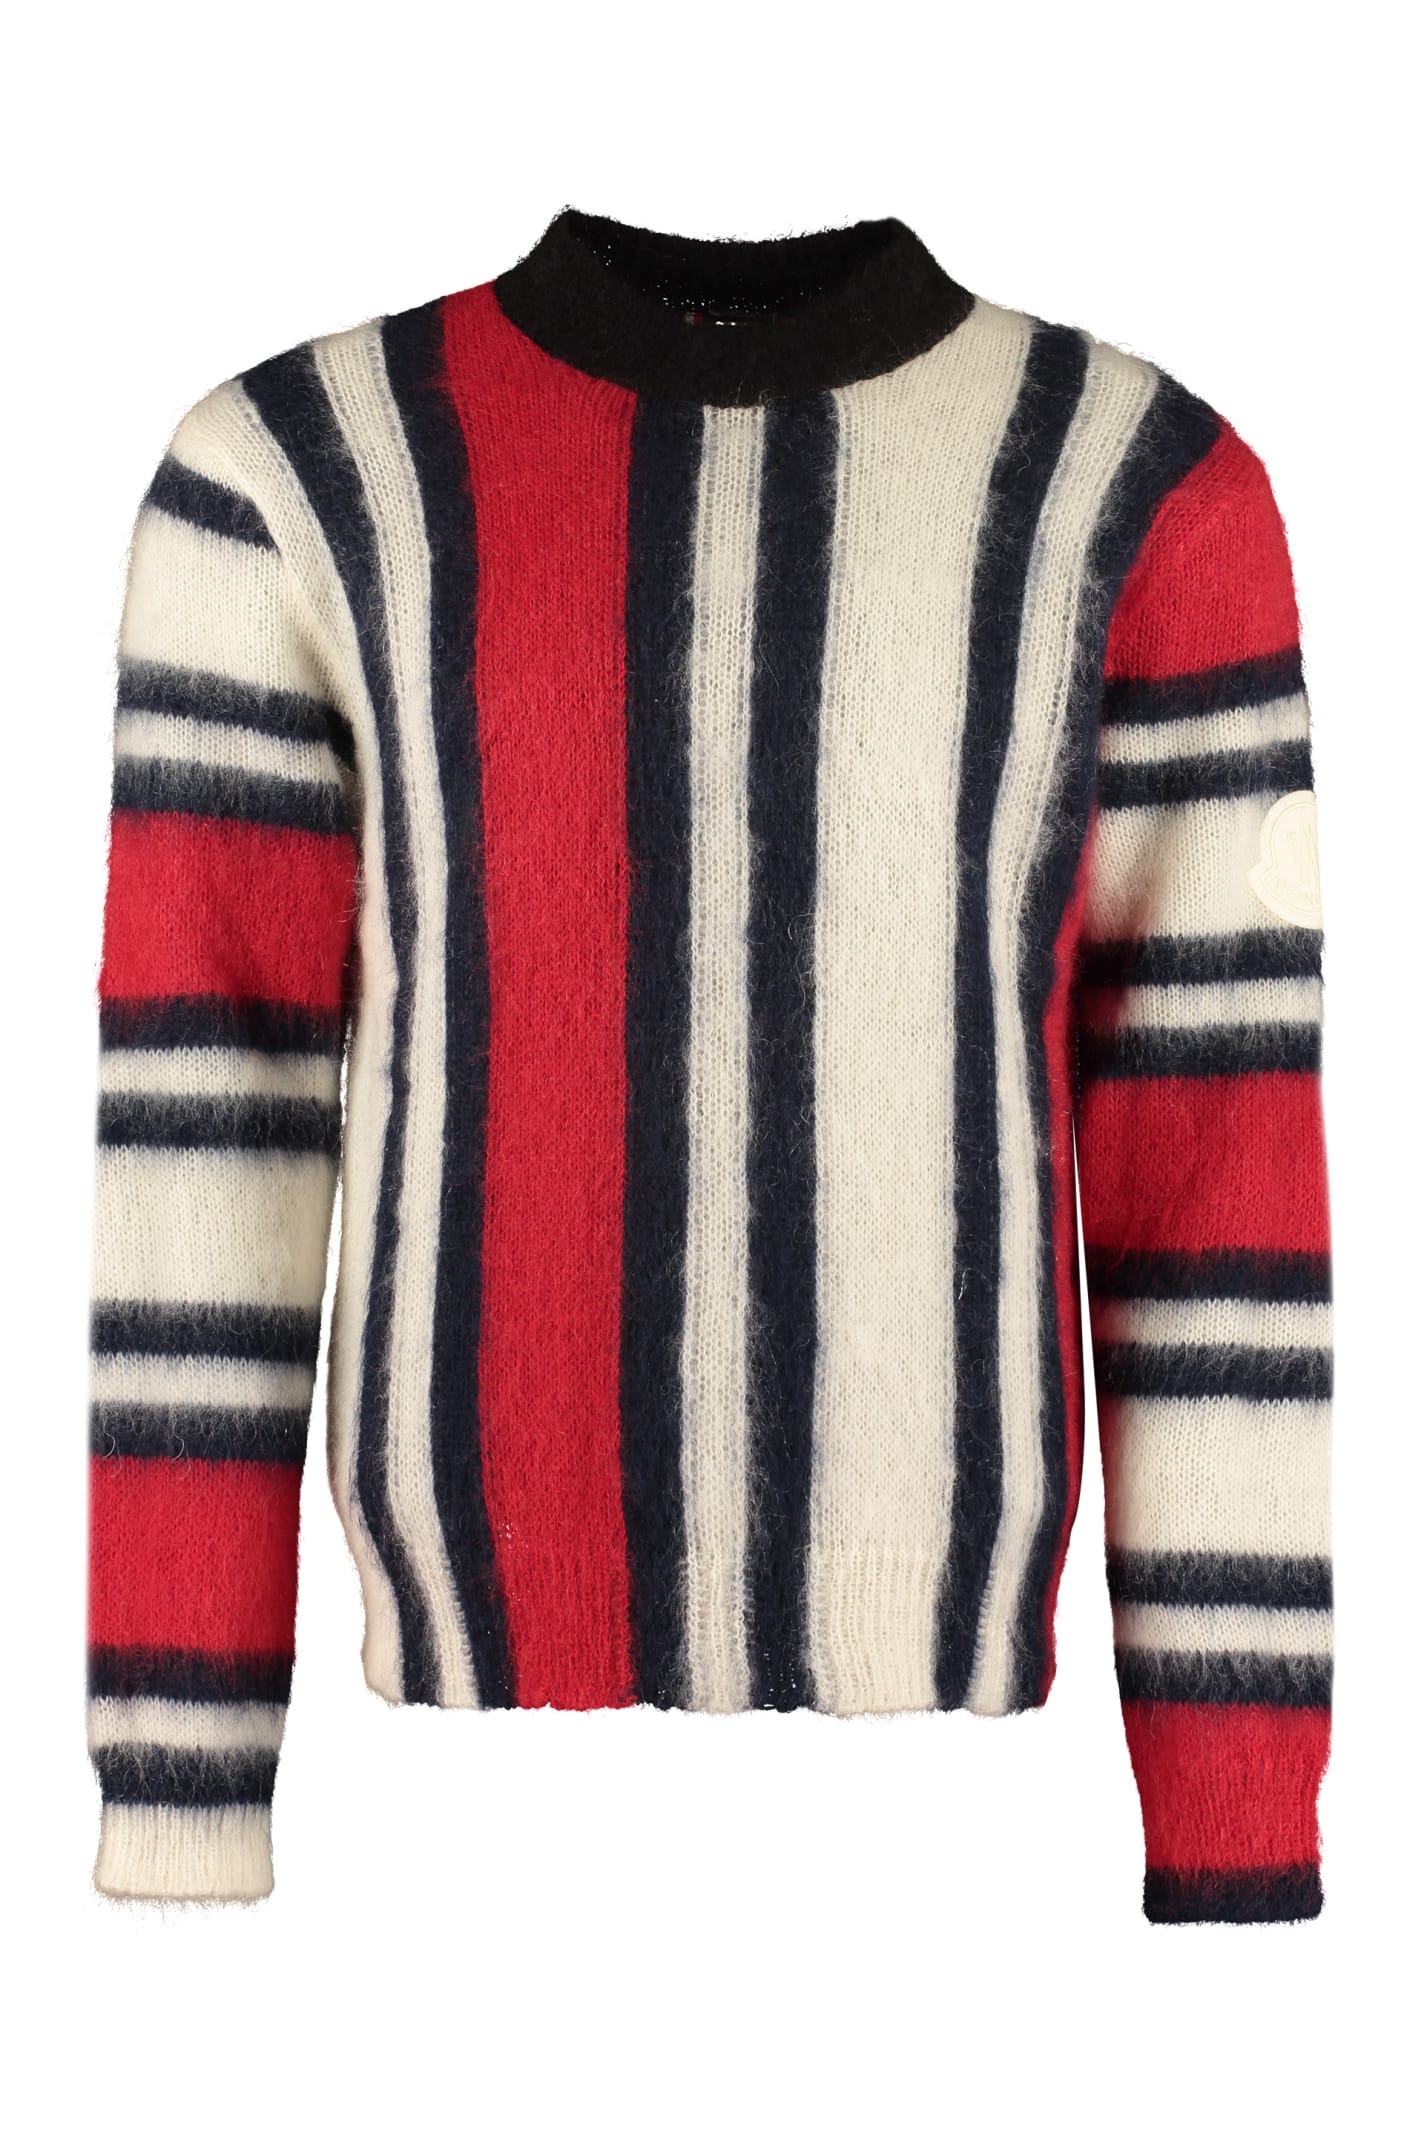 Moncler Genius 2 Moncler 1952 - Striped Mohair Sweater